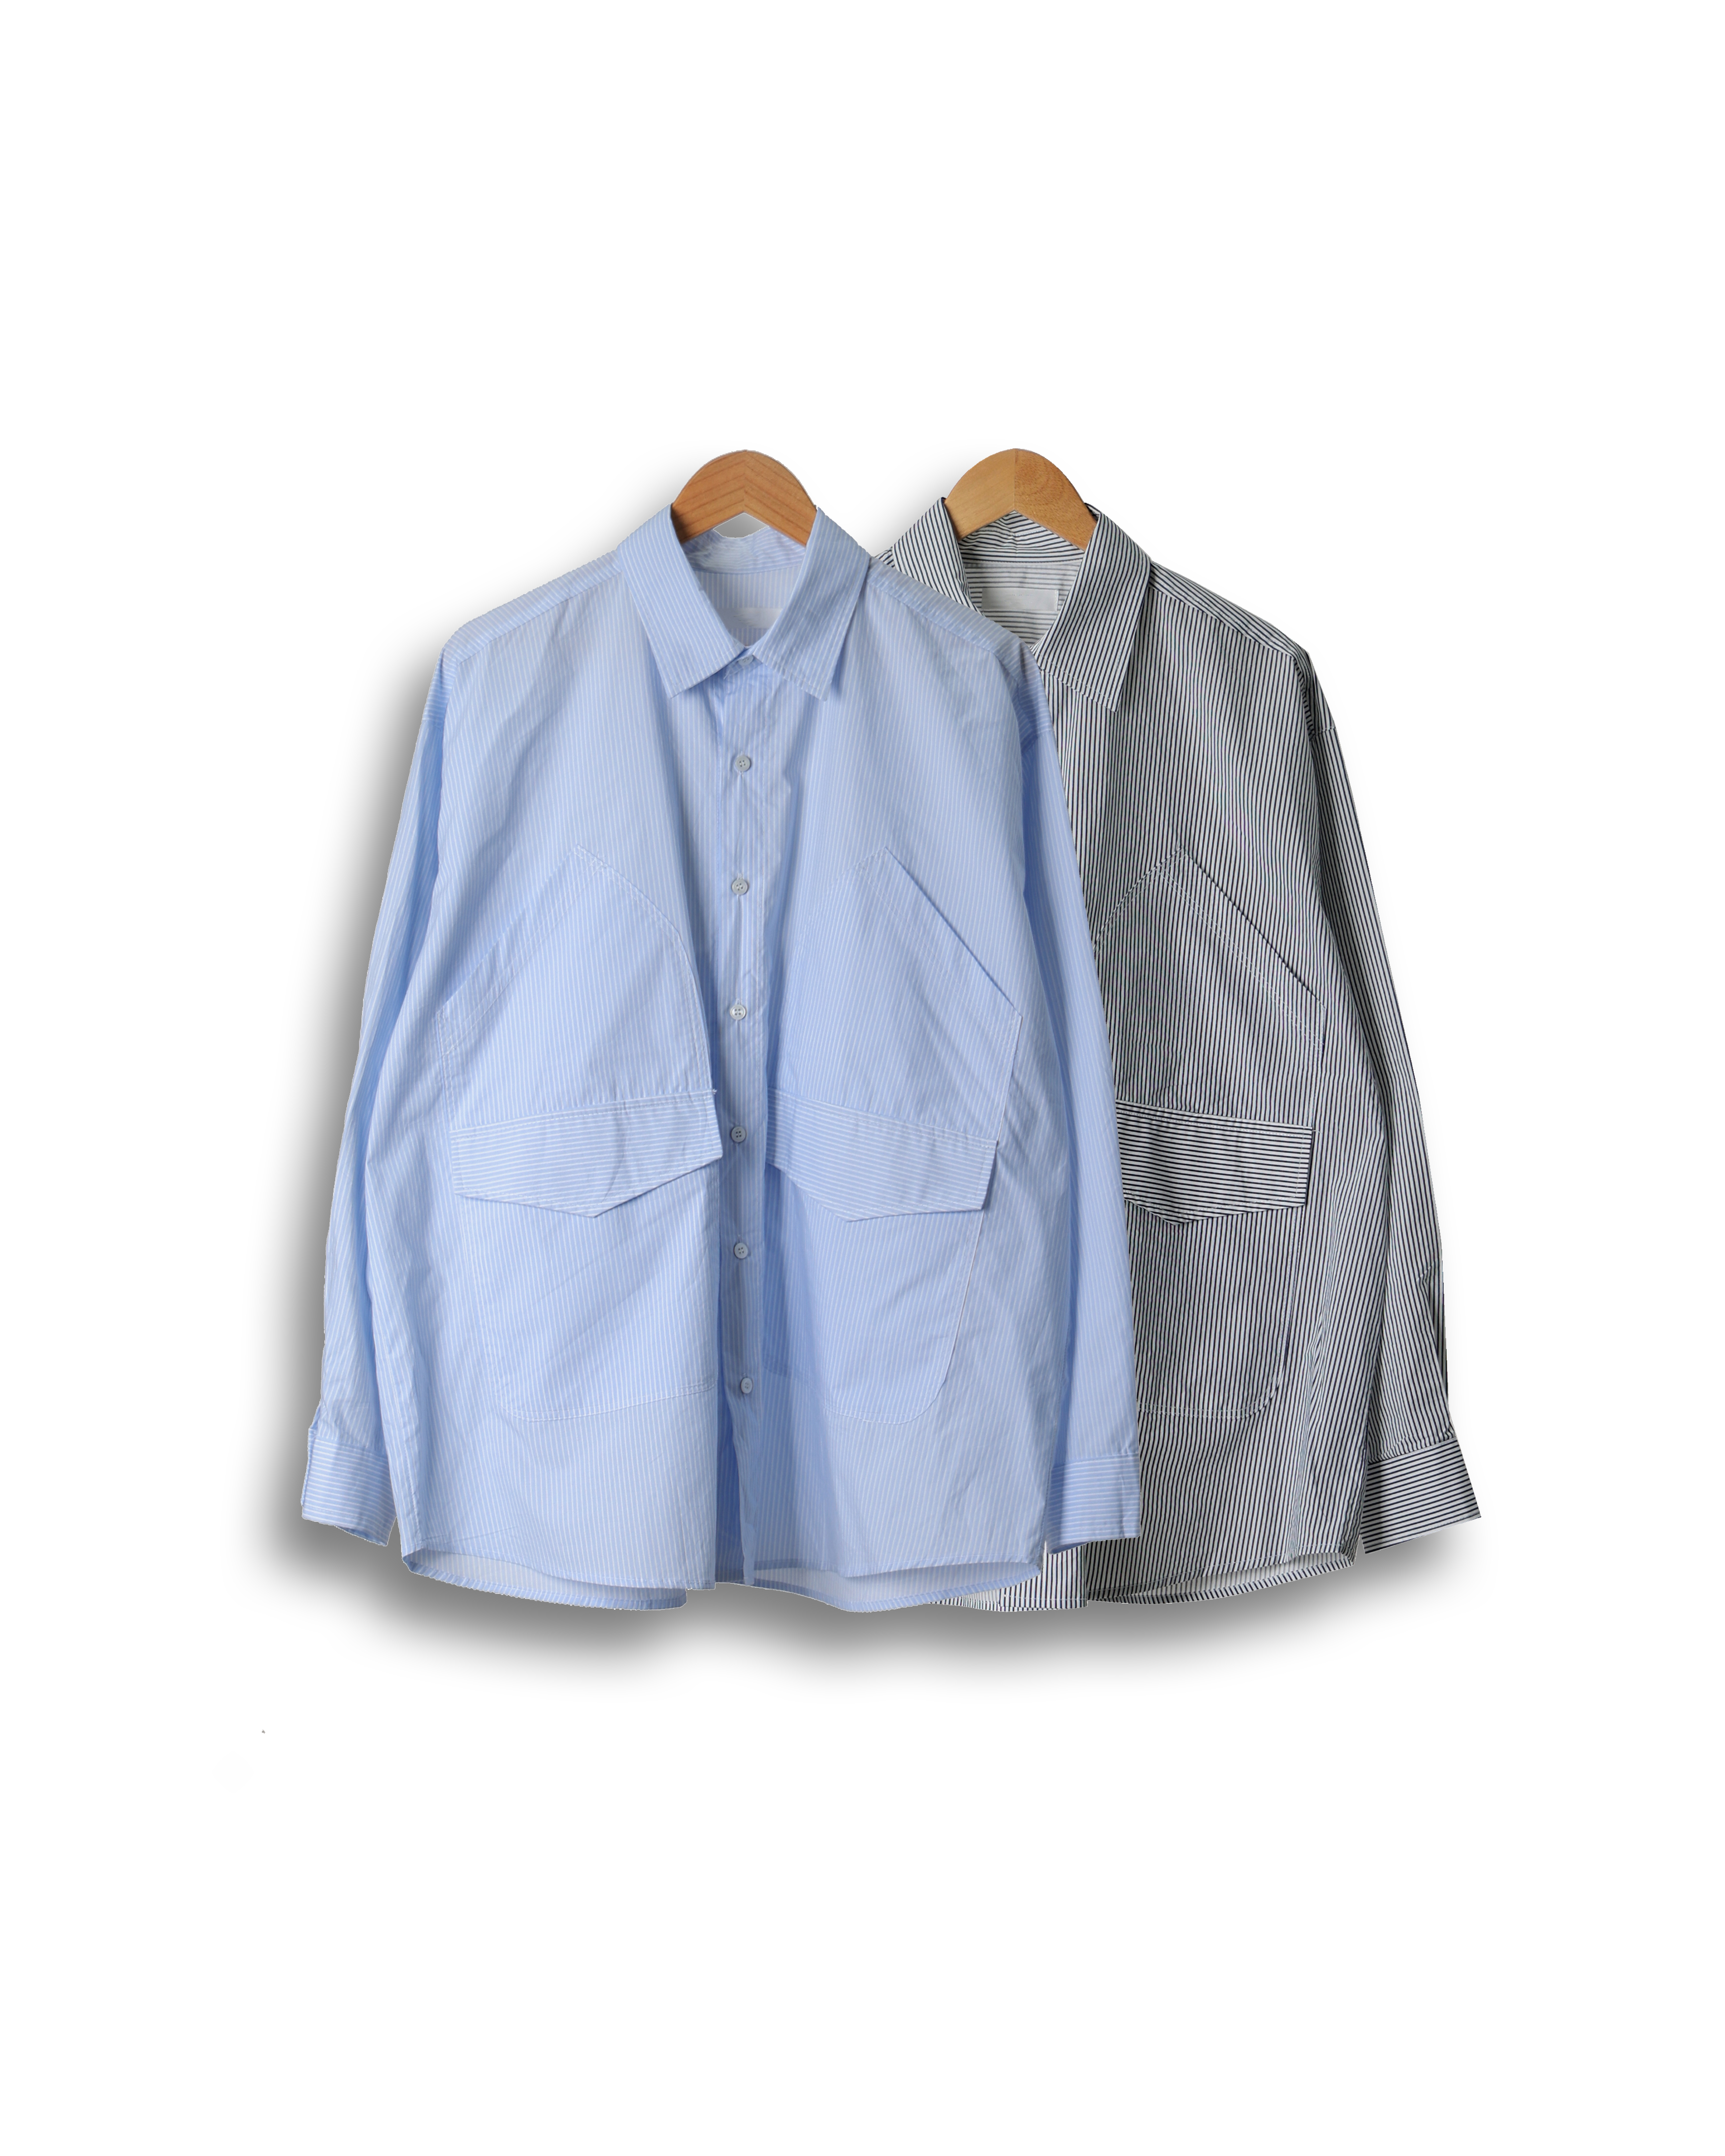 SOME Stripe Work Pocket Shirts (Navy/ Sky Blue)